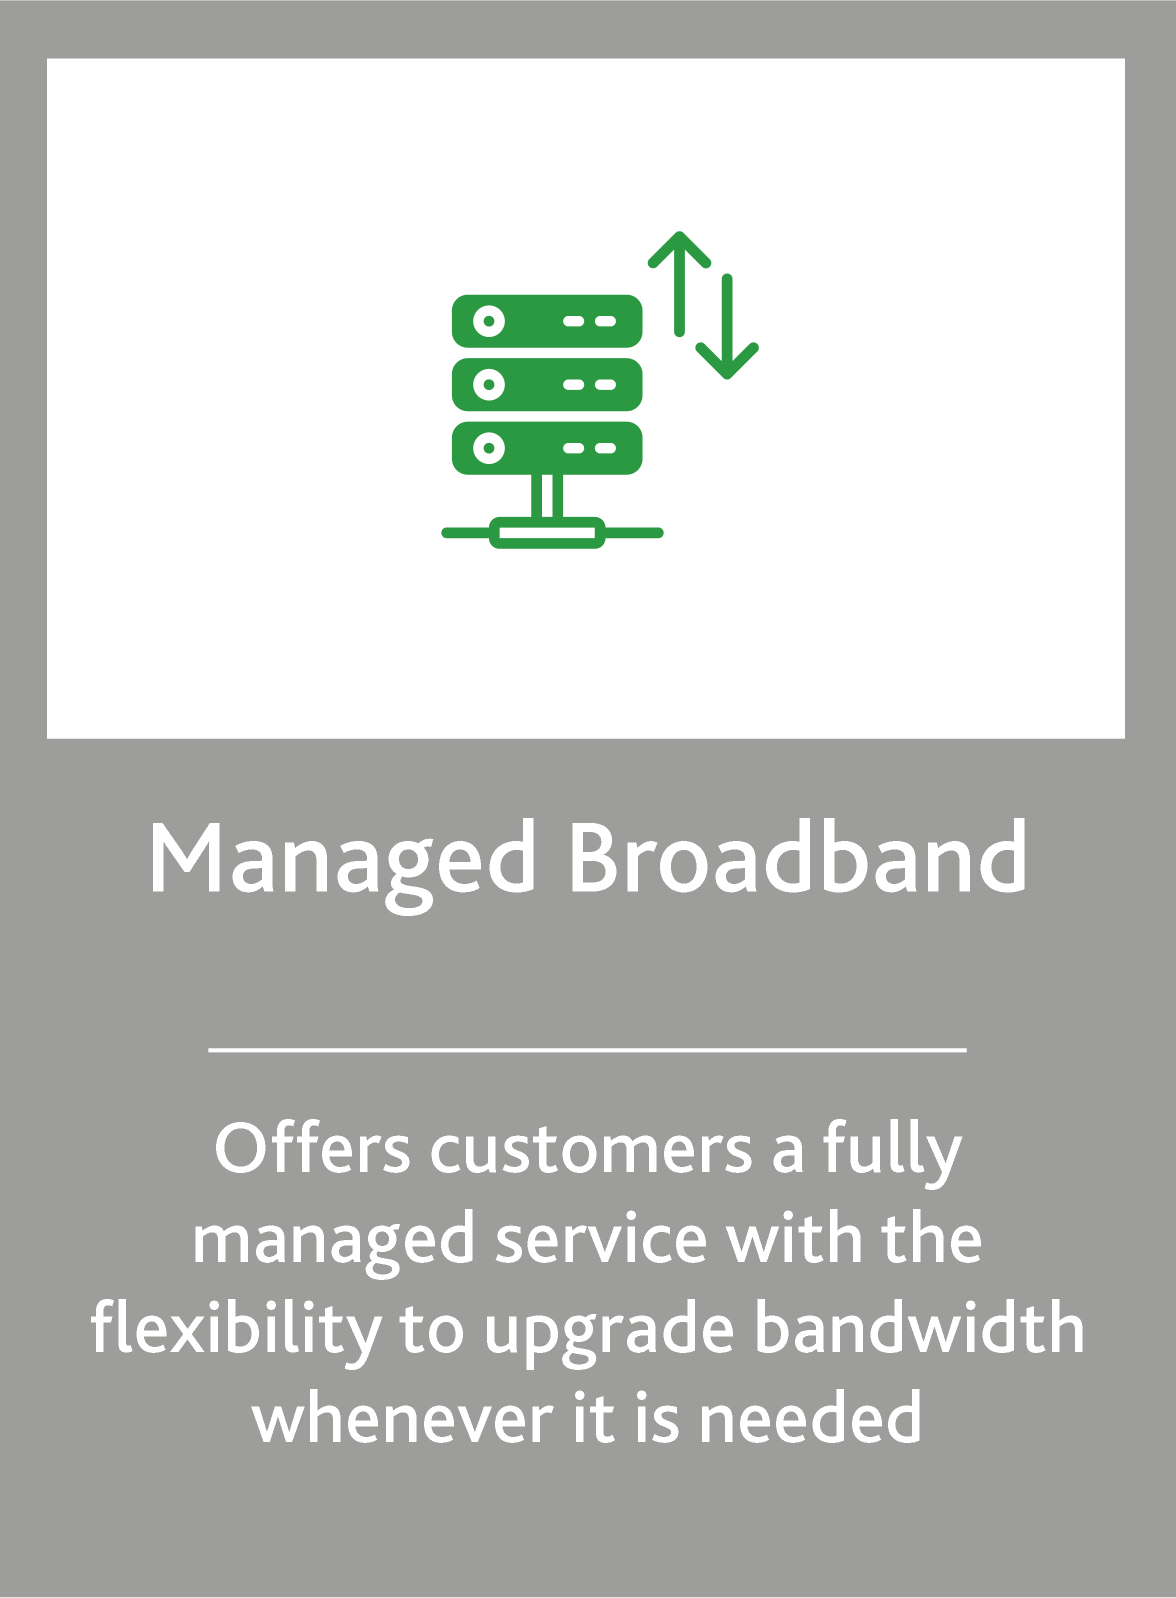 //kalaam-telecom.com/wp-content/uploads/2020/03/Managed-Broadband.png